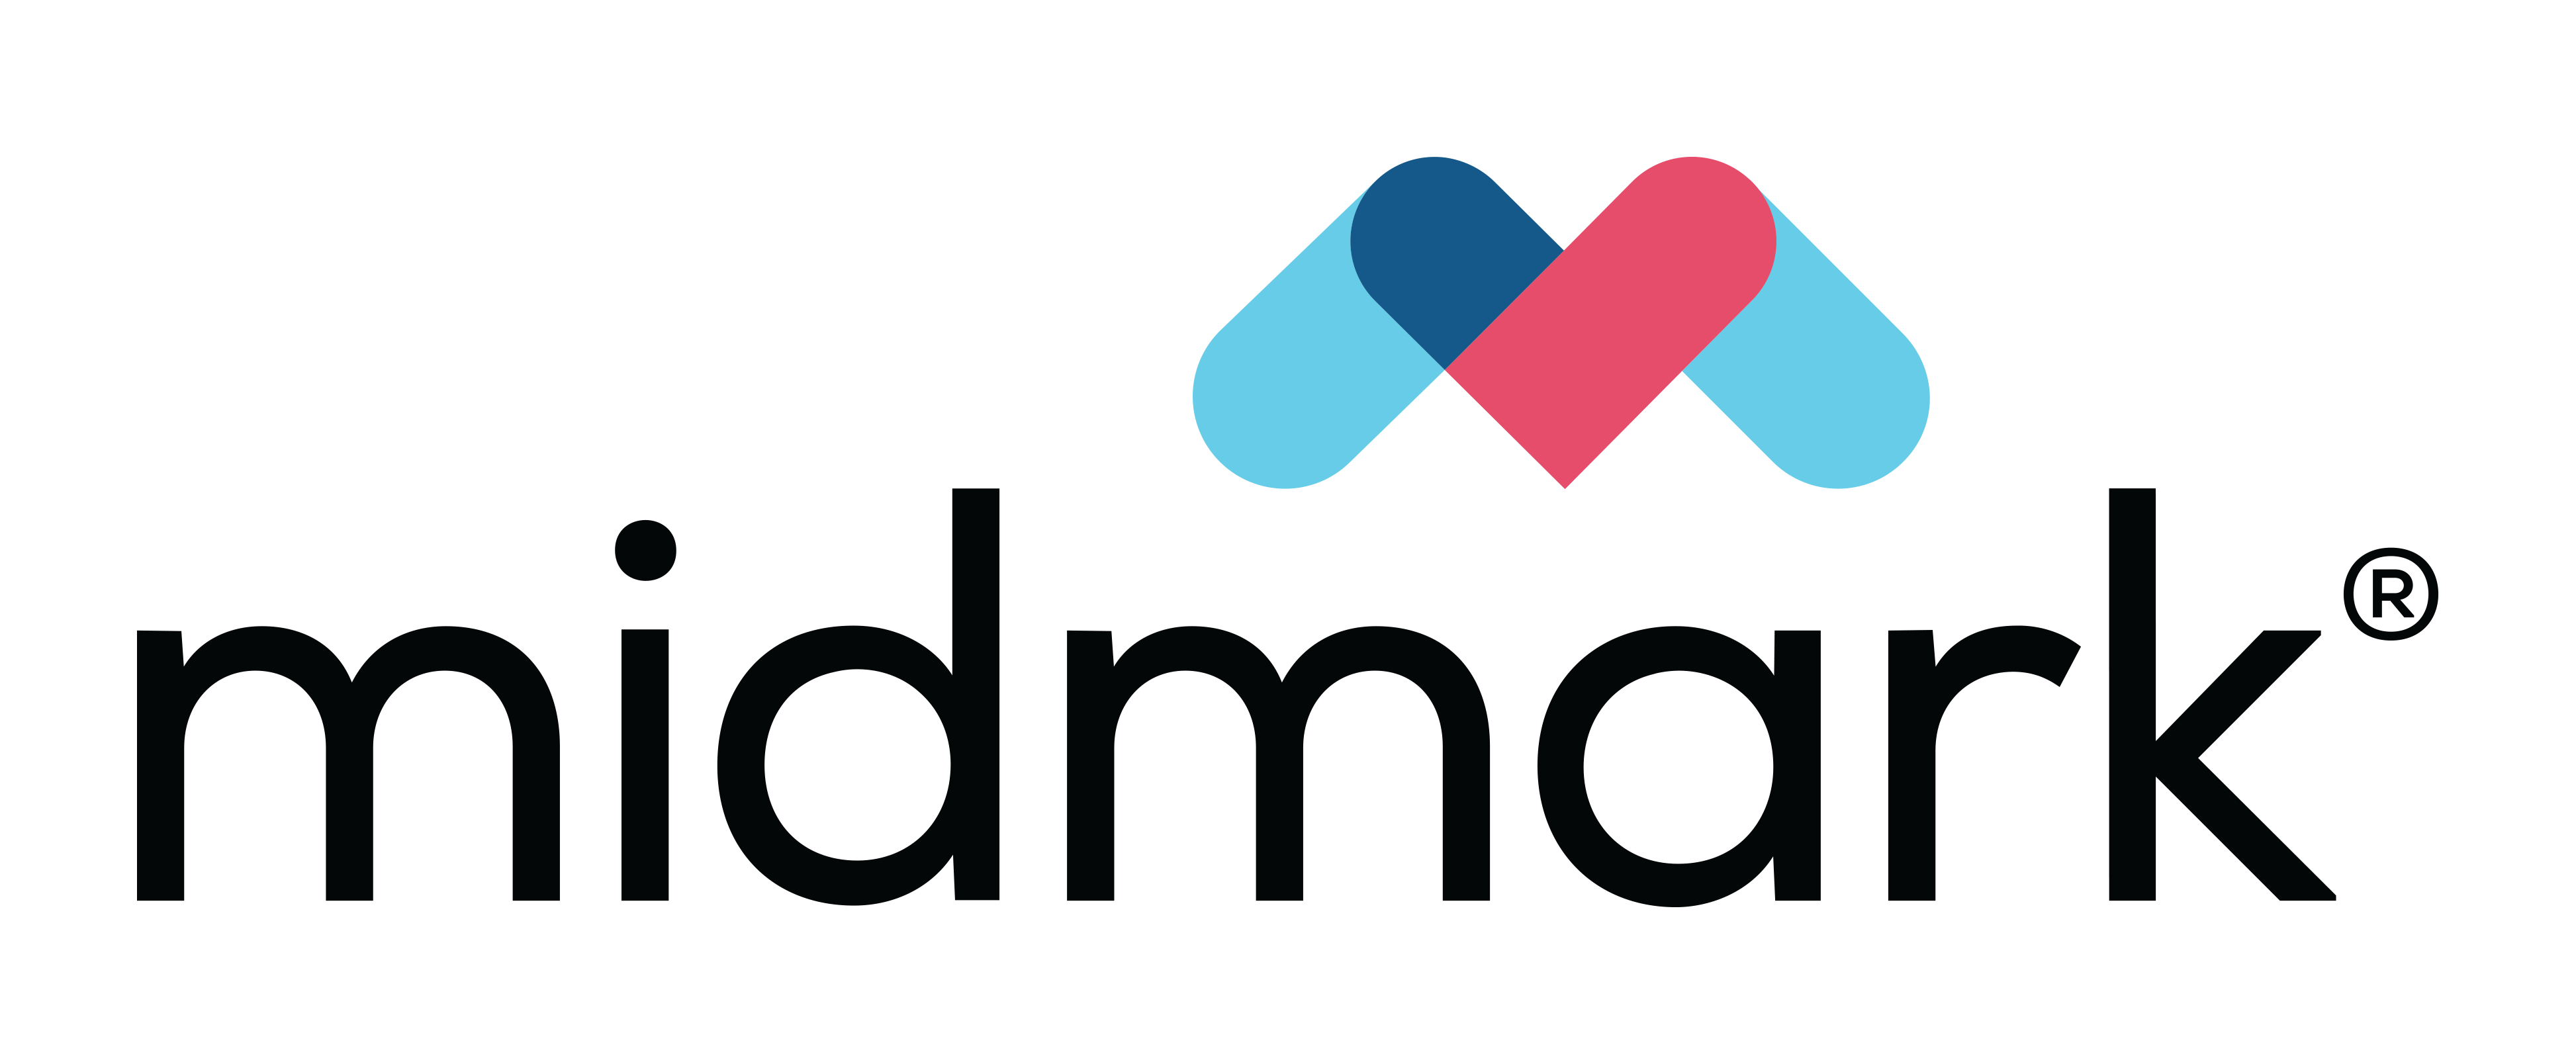 Midmark Logo